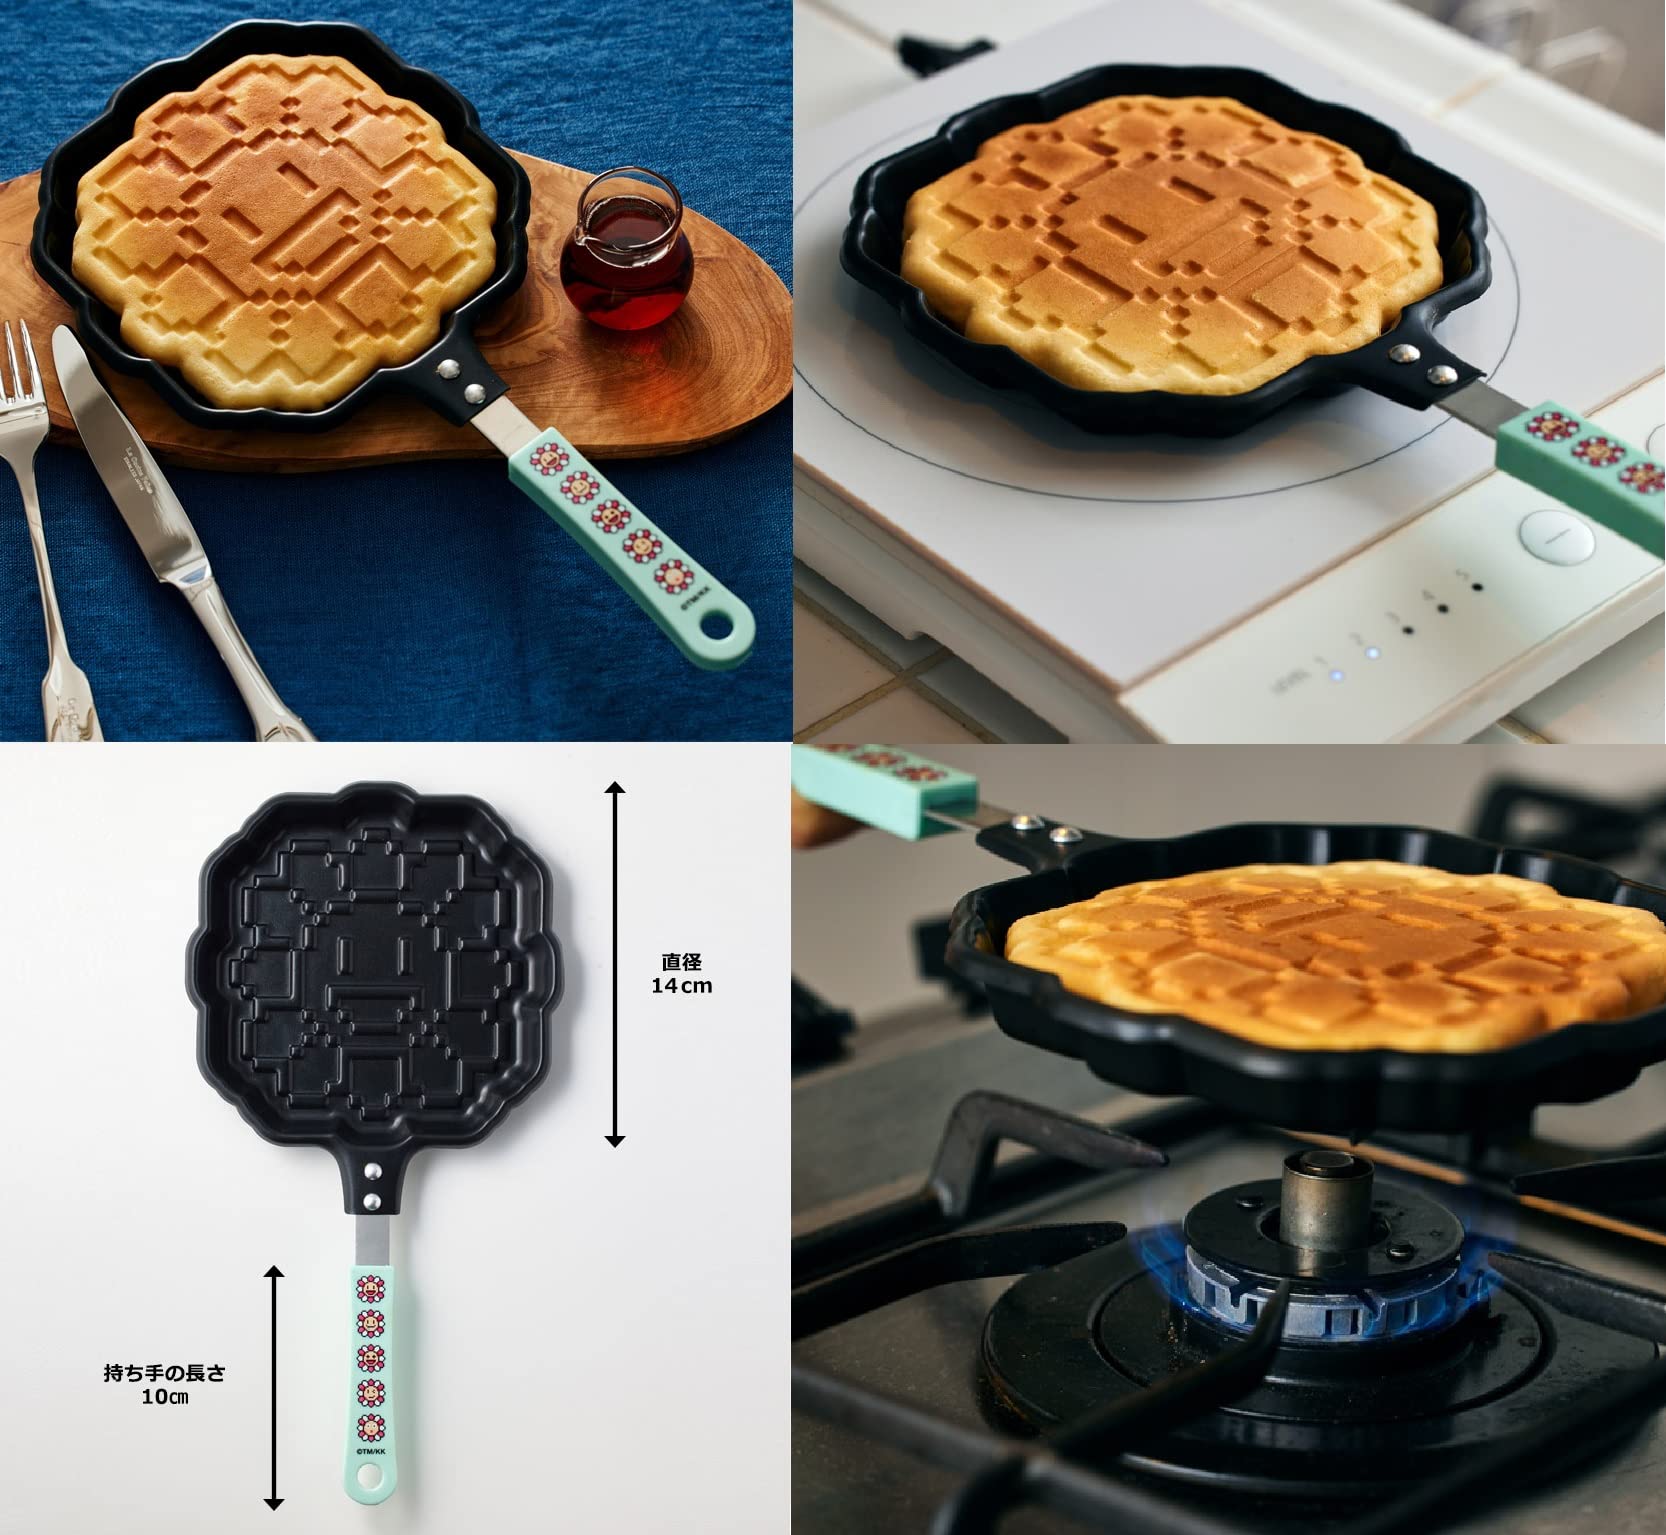 Takashi Murakami x Smart Magazine Pancake Maker Set of 2 - FW21 - US